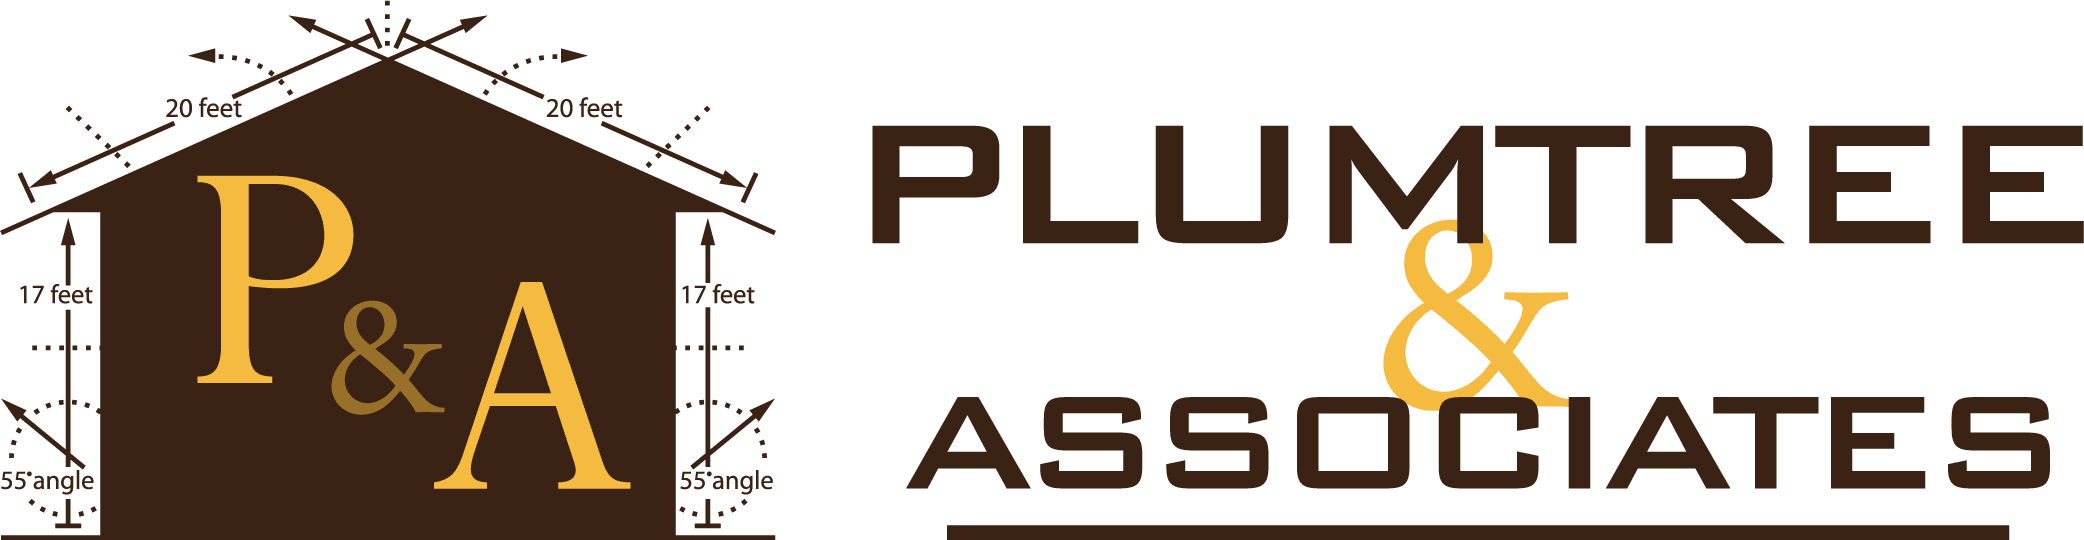 Plumtree & Associates Construction Law Attorneys | Pro Contractors Club